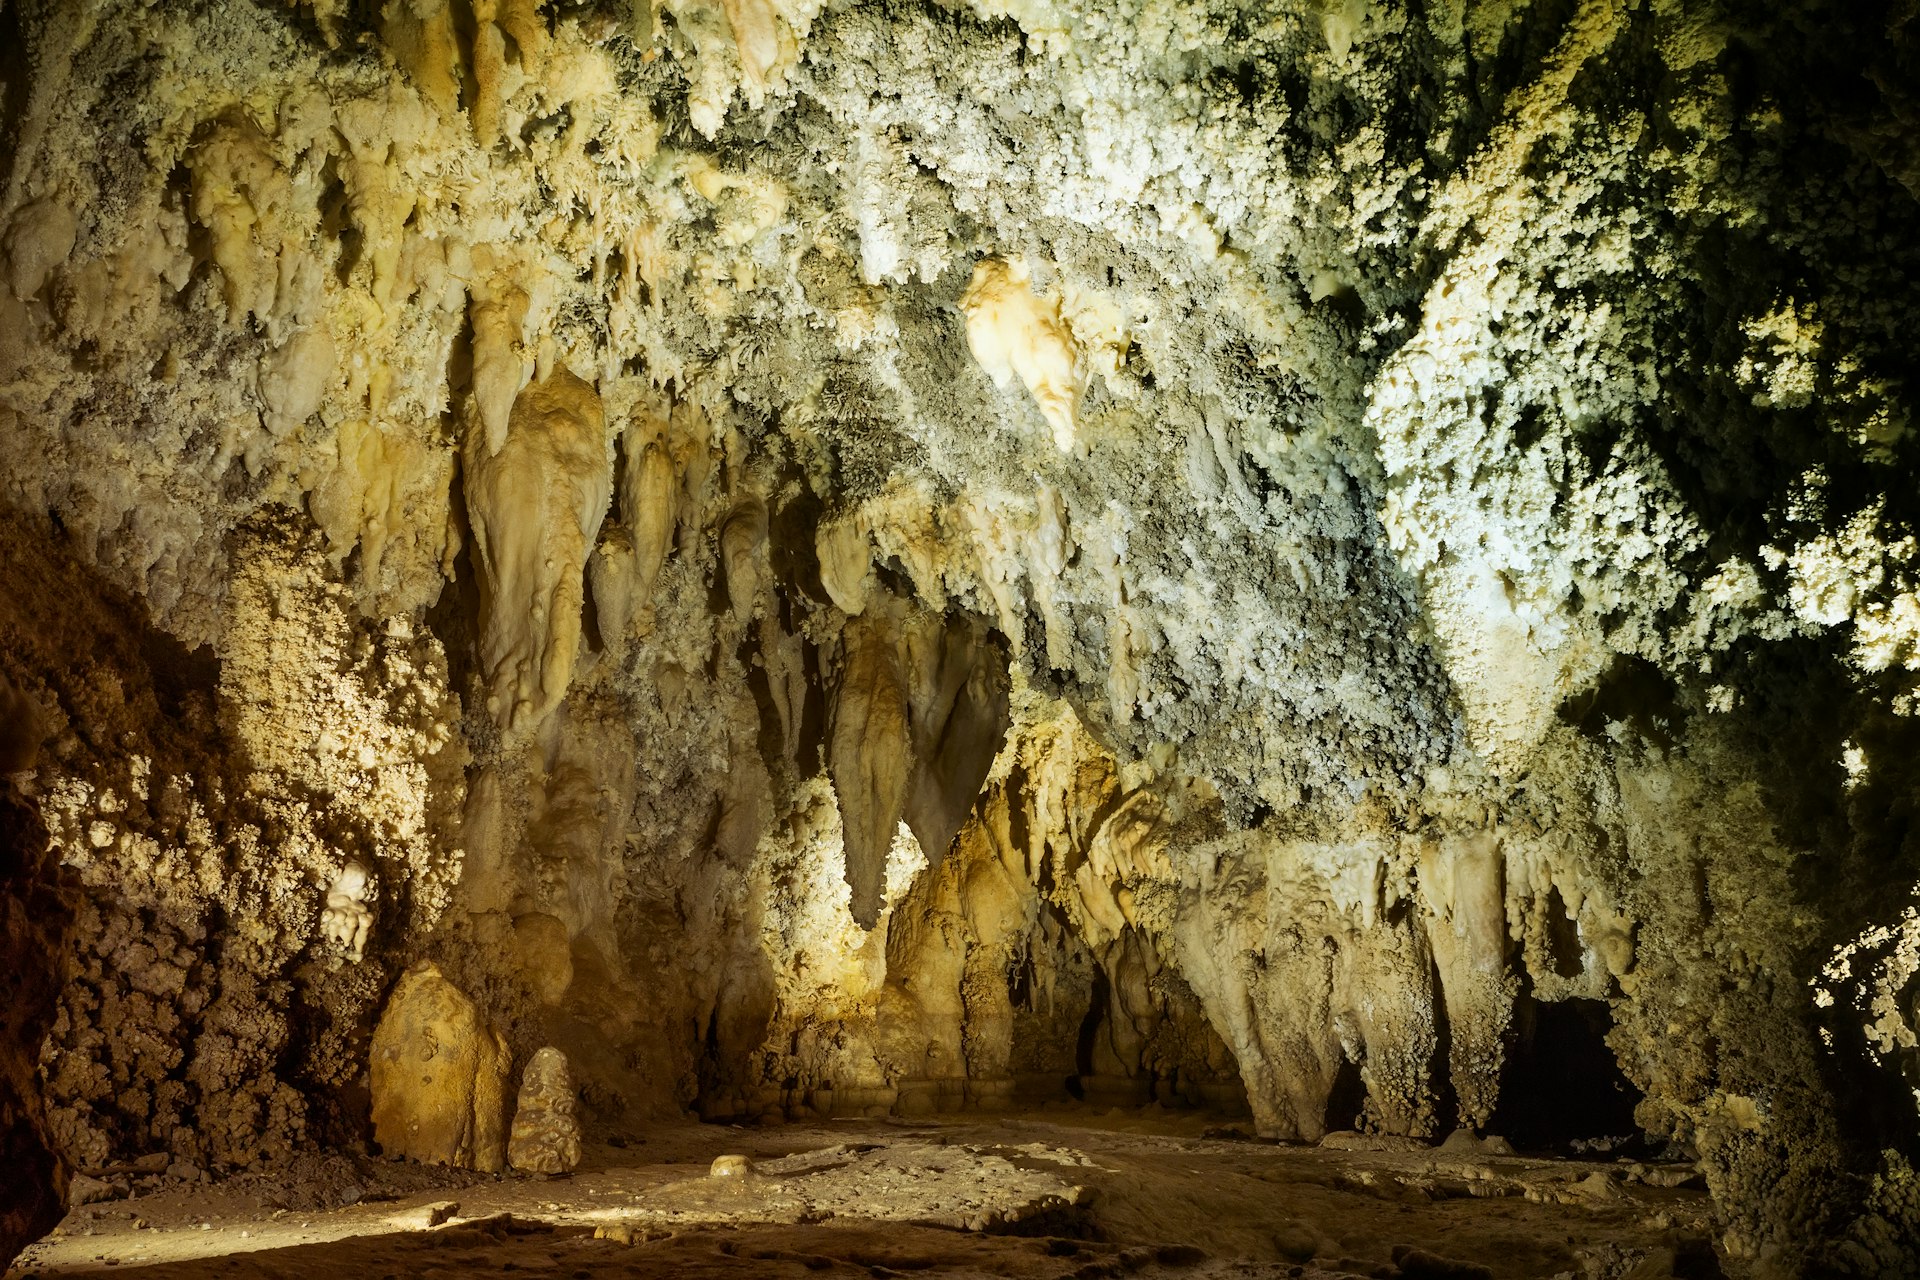 Undulating dripstone formations in Timpanogos Cave, Salt Lake City